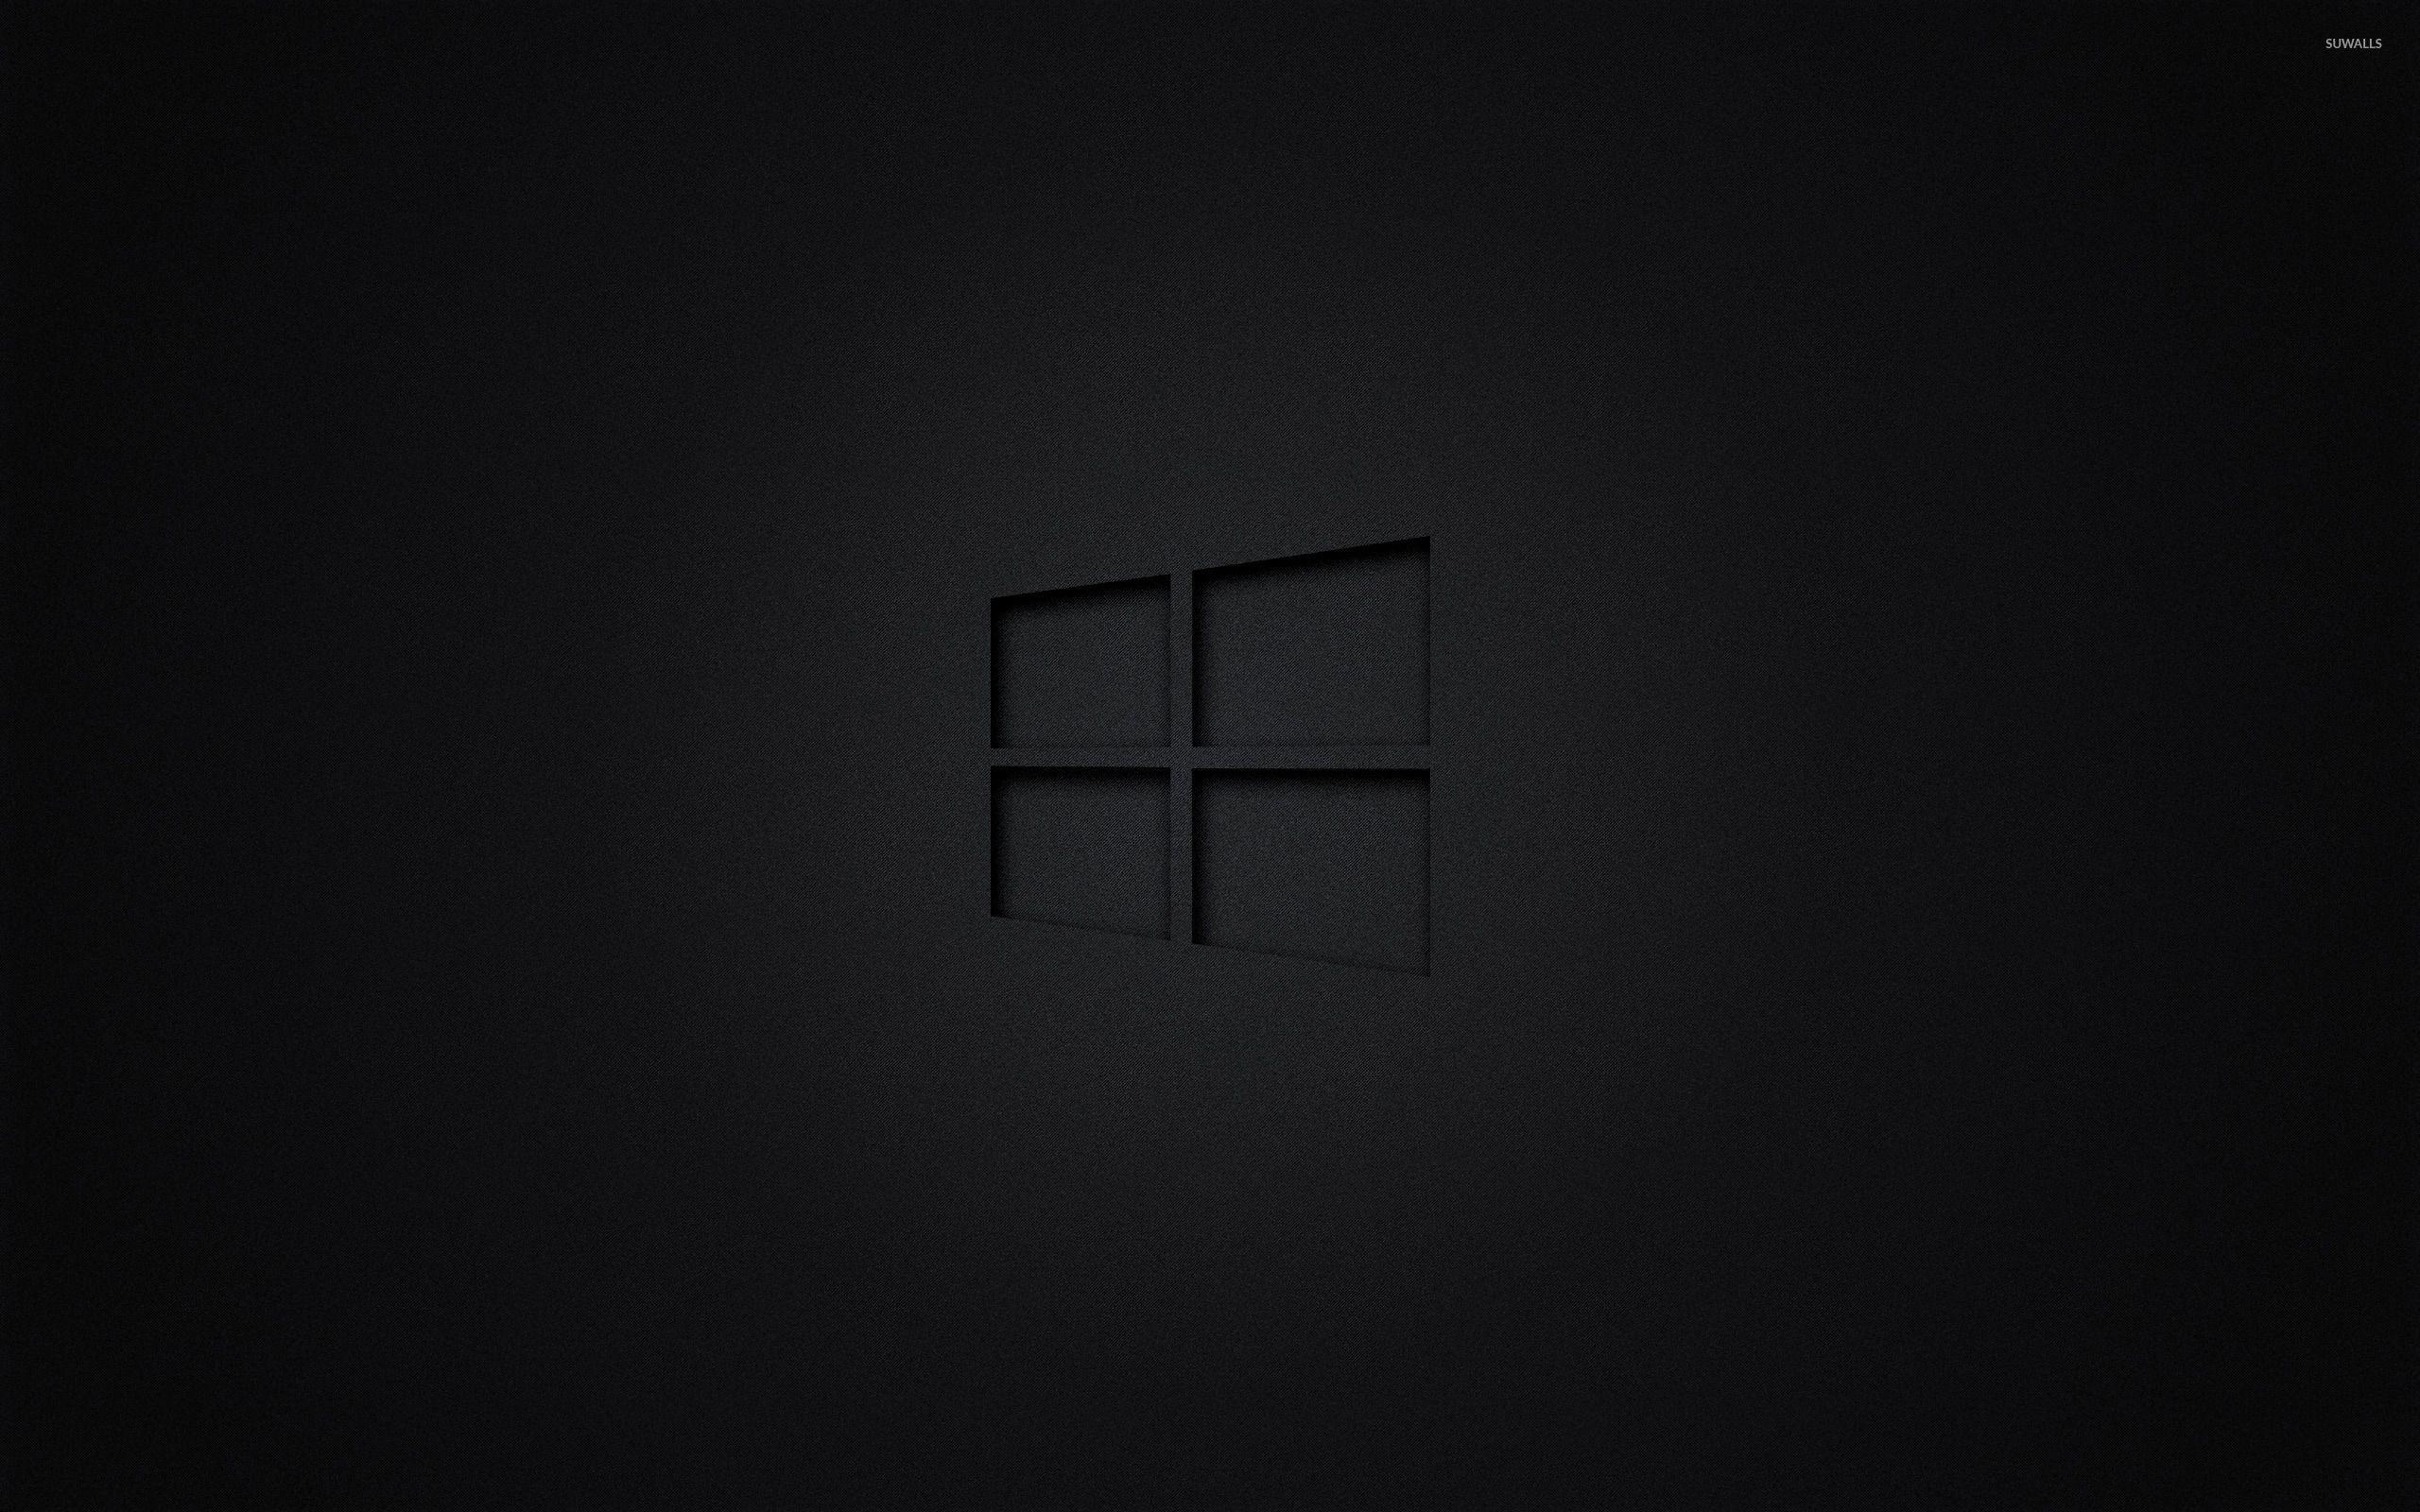 Download 26 Black Windows 10 Logo Png Uniforms 2017